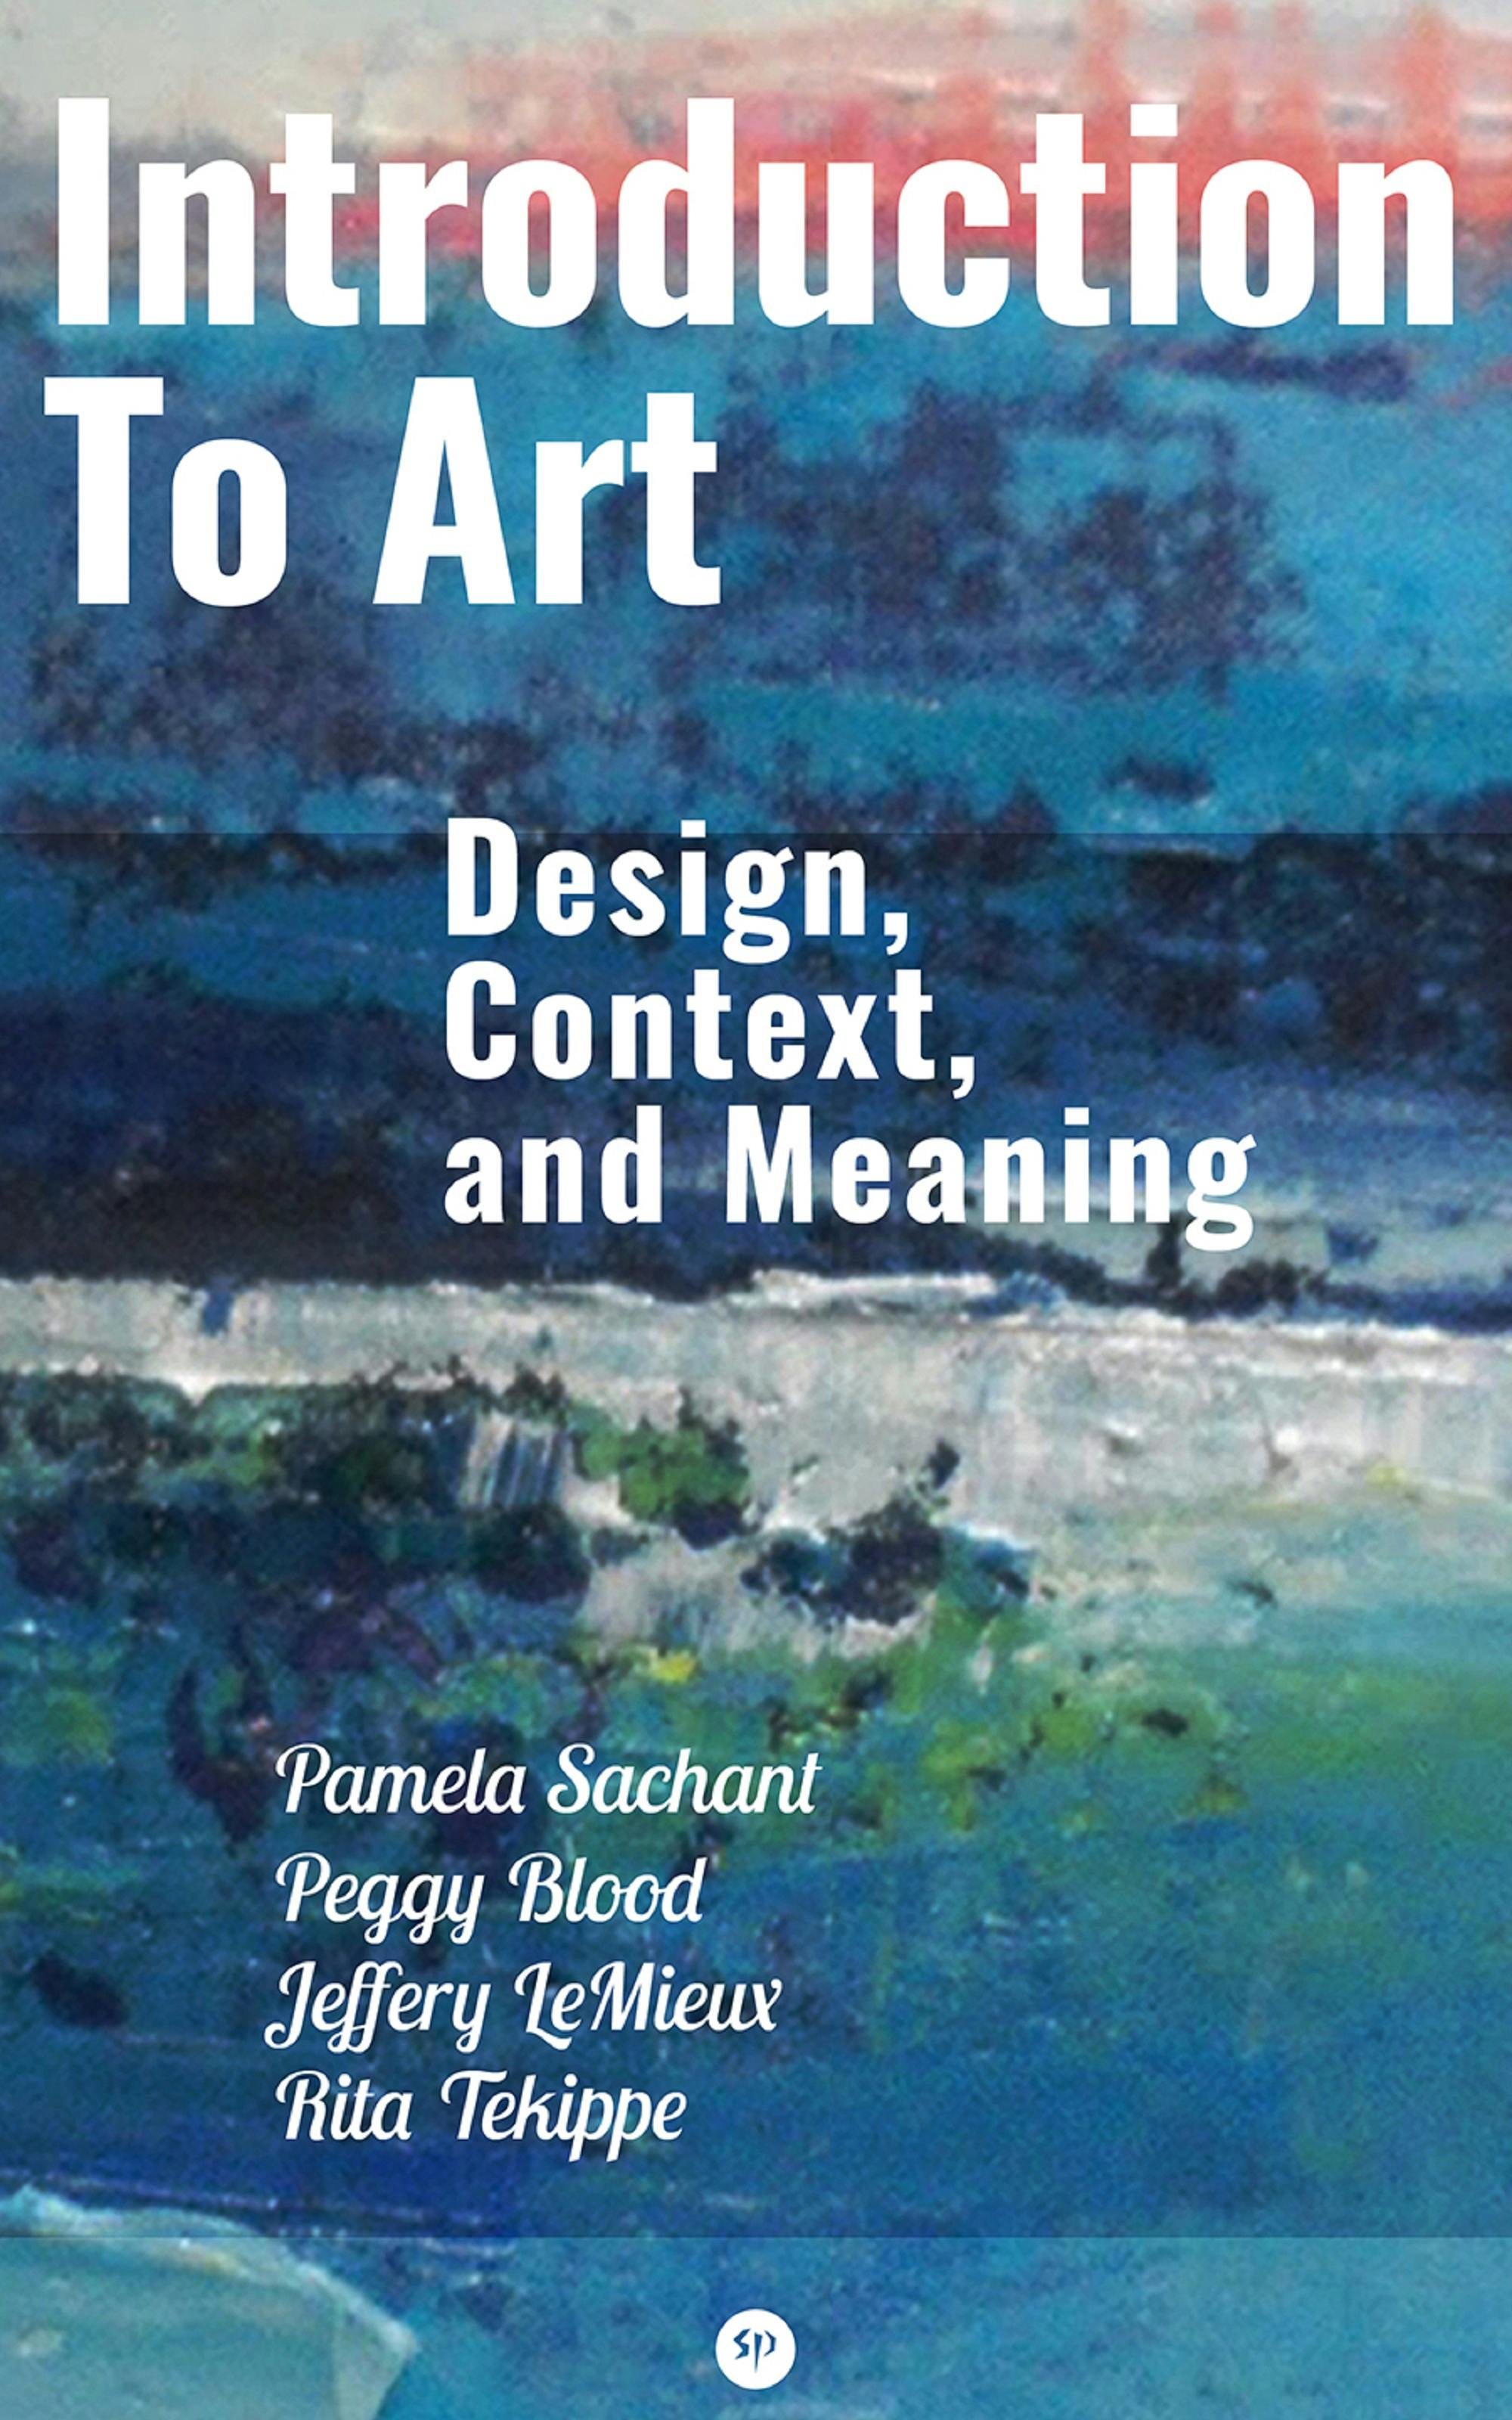 Introduction to Art: Design, Context, and Meaning - Pamela Sachant, Rita Tekippe, Peggy Blood, Jeffery LeMieux